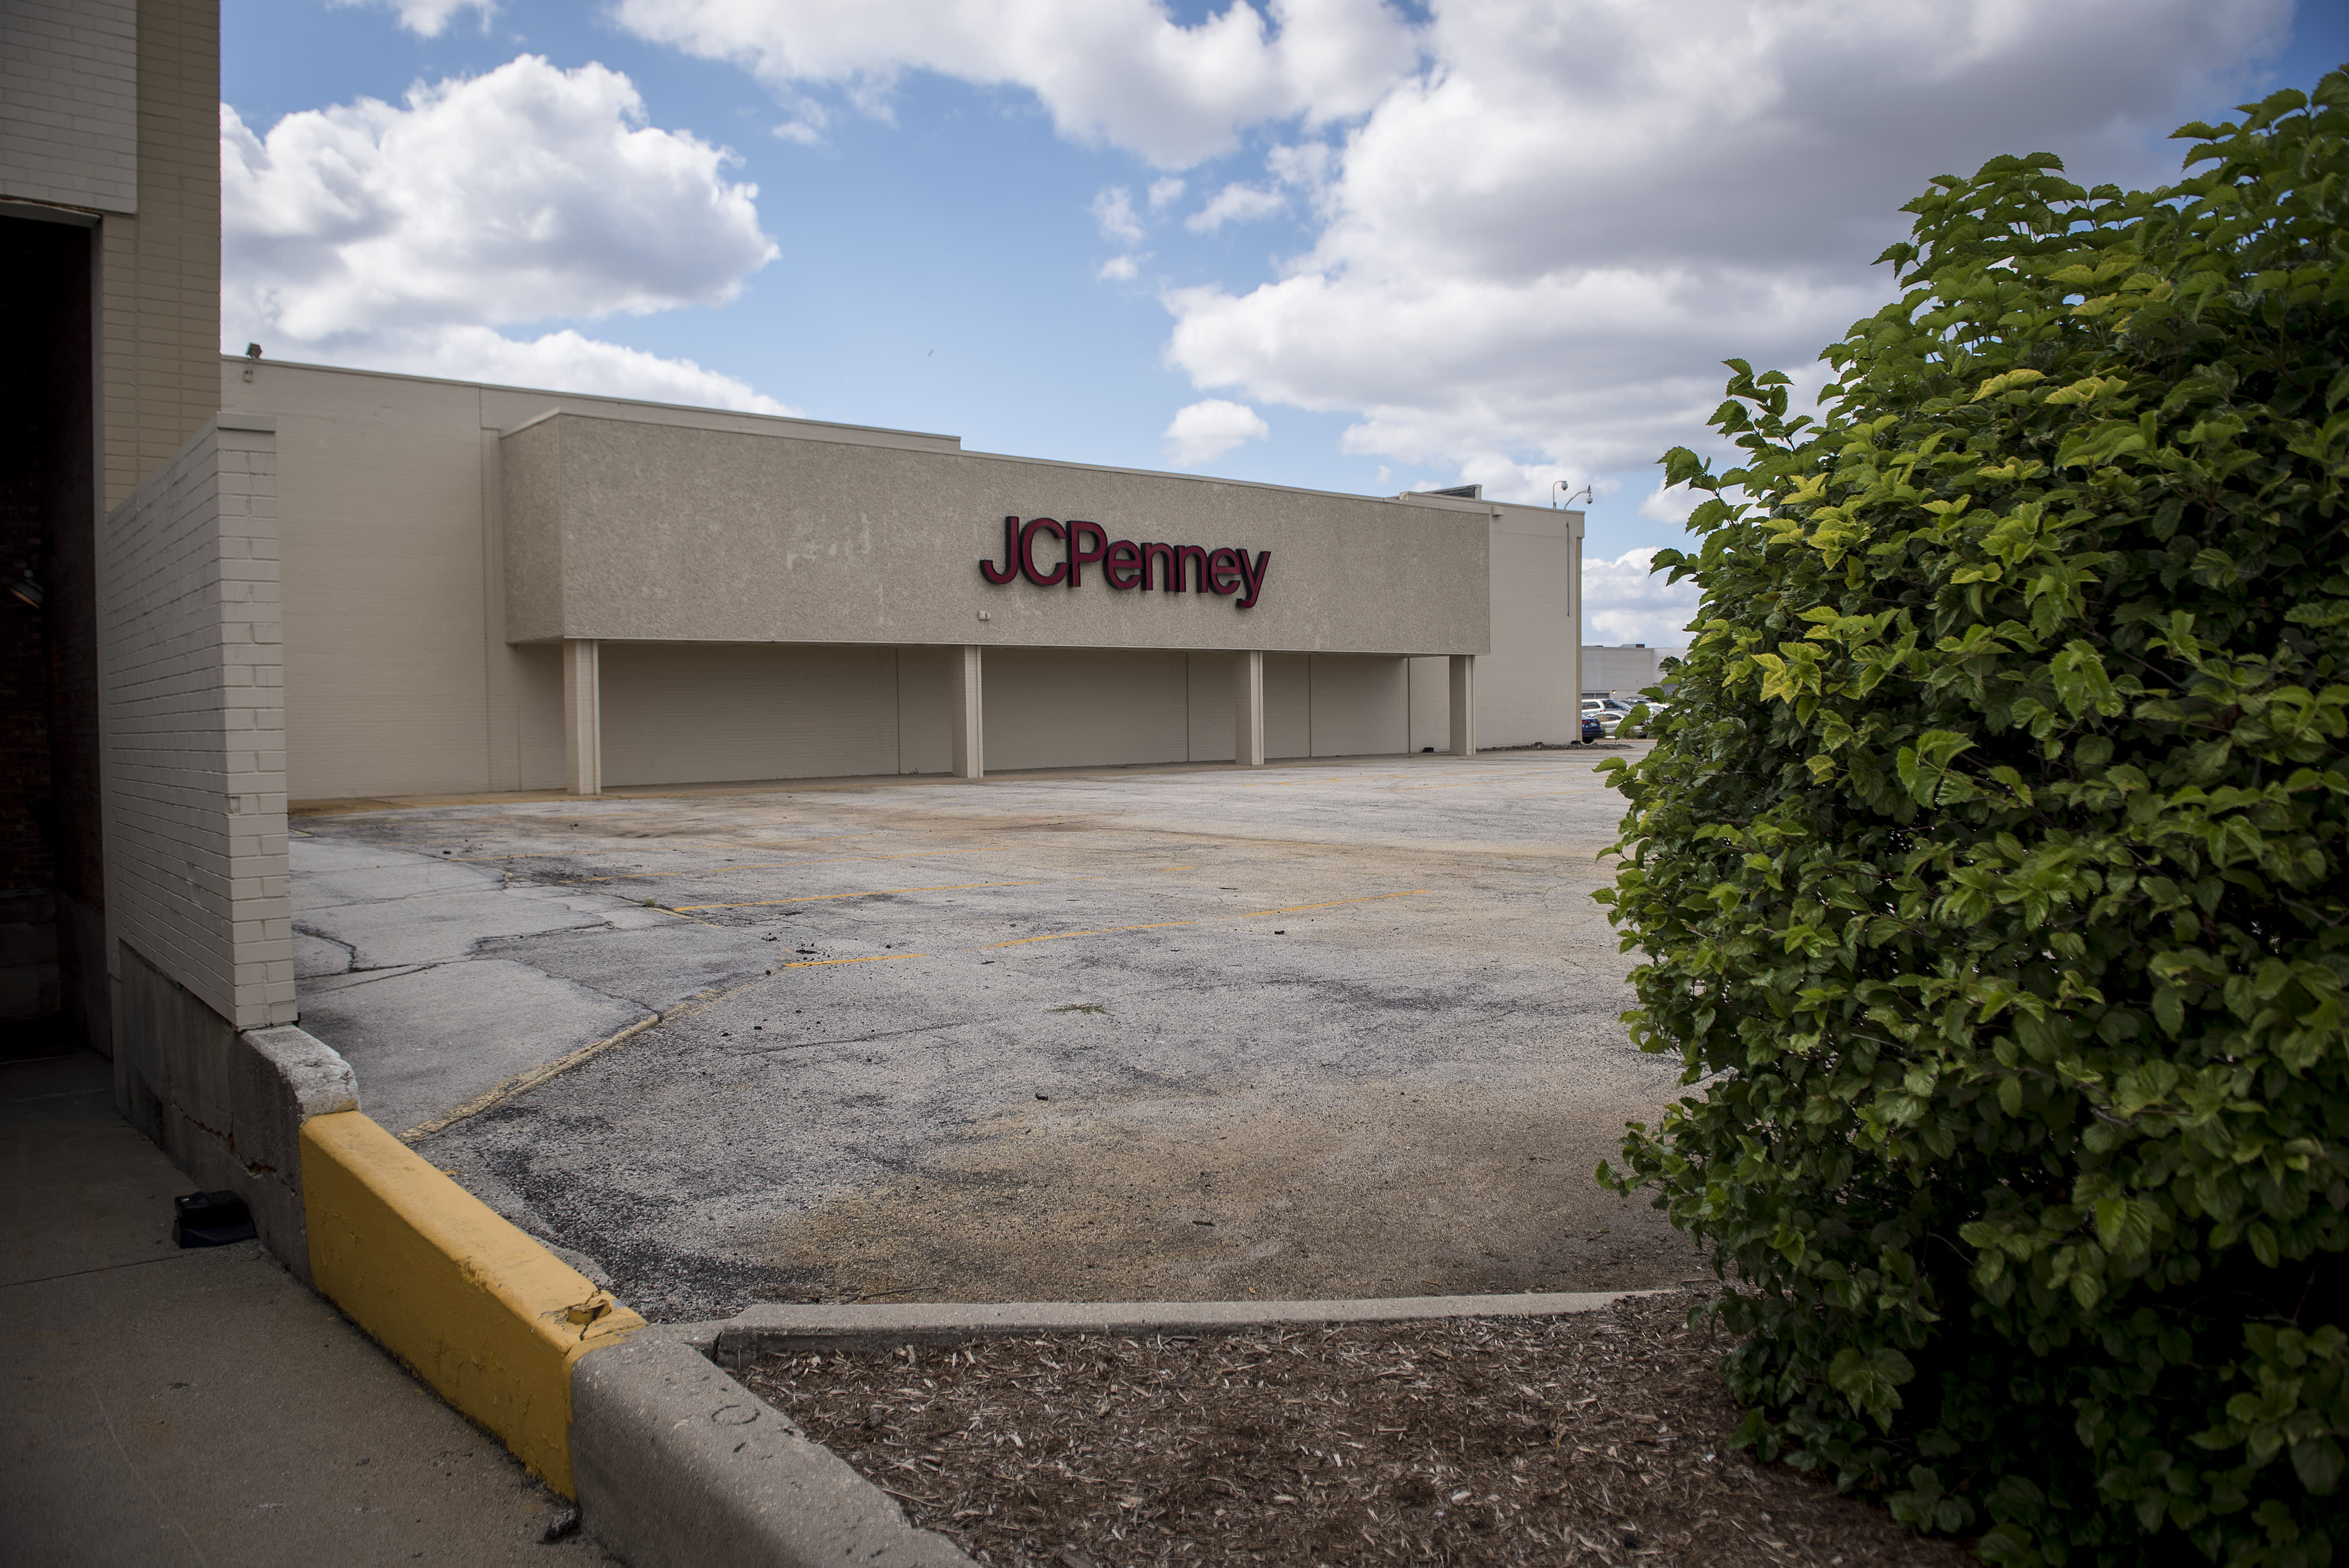 JC Solney CEO JC Penney leaves retailer after appearing bankrupt